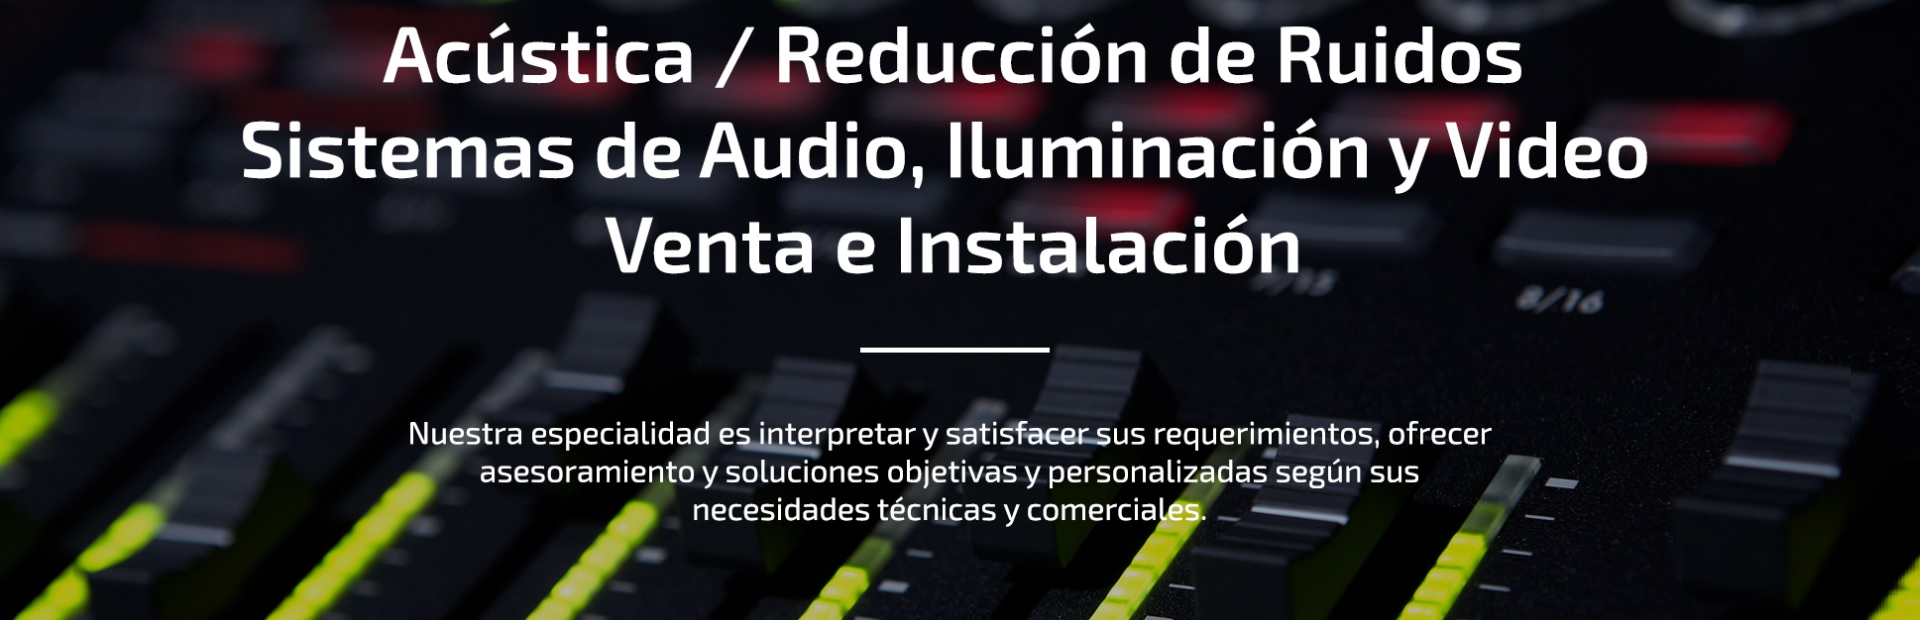 CBZ La Plata, Audio Pro y Acústica